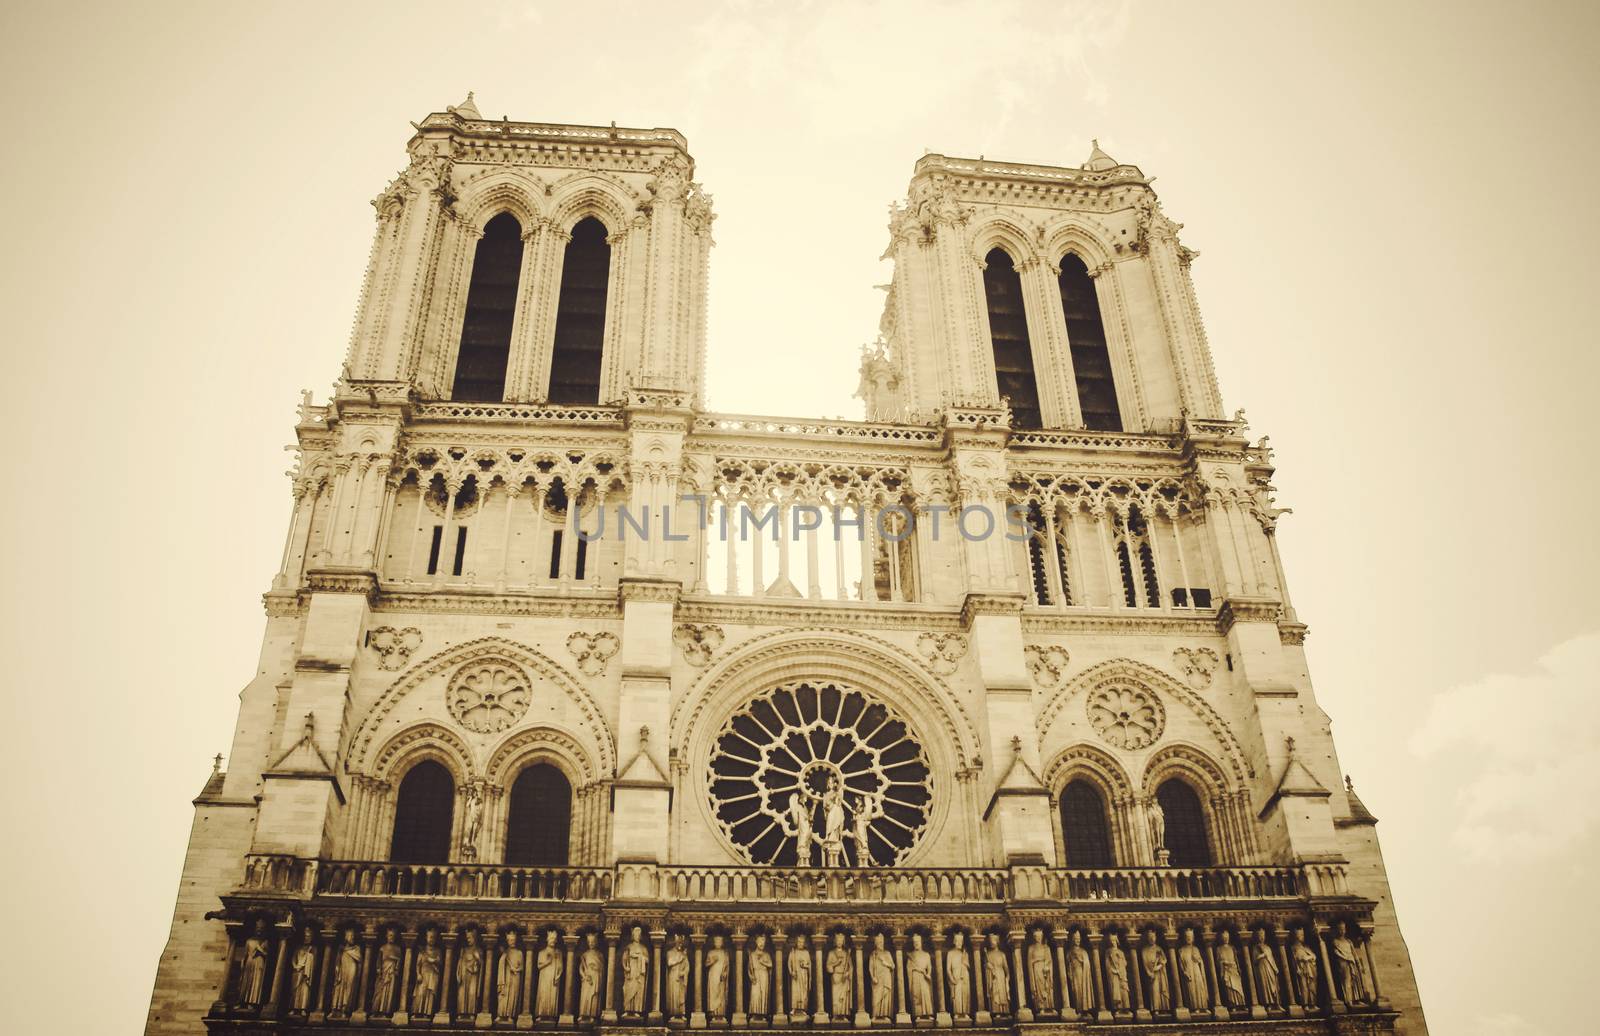 Notre Dame de Paris with sepia toned